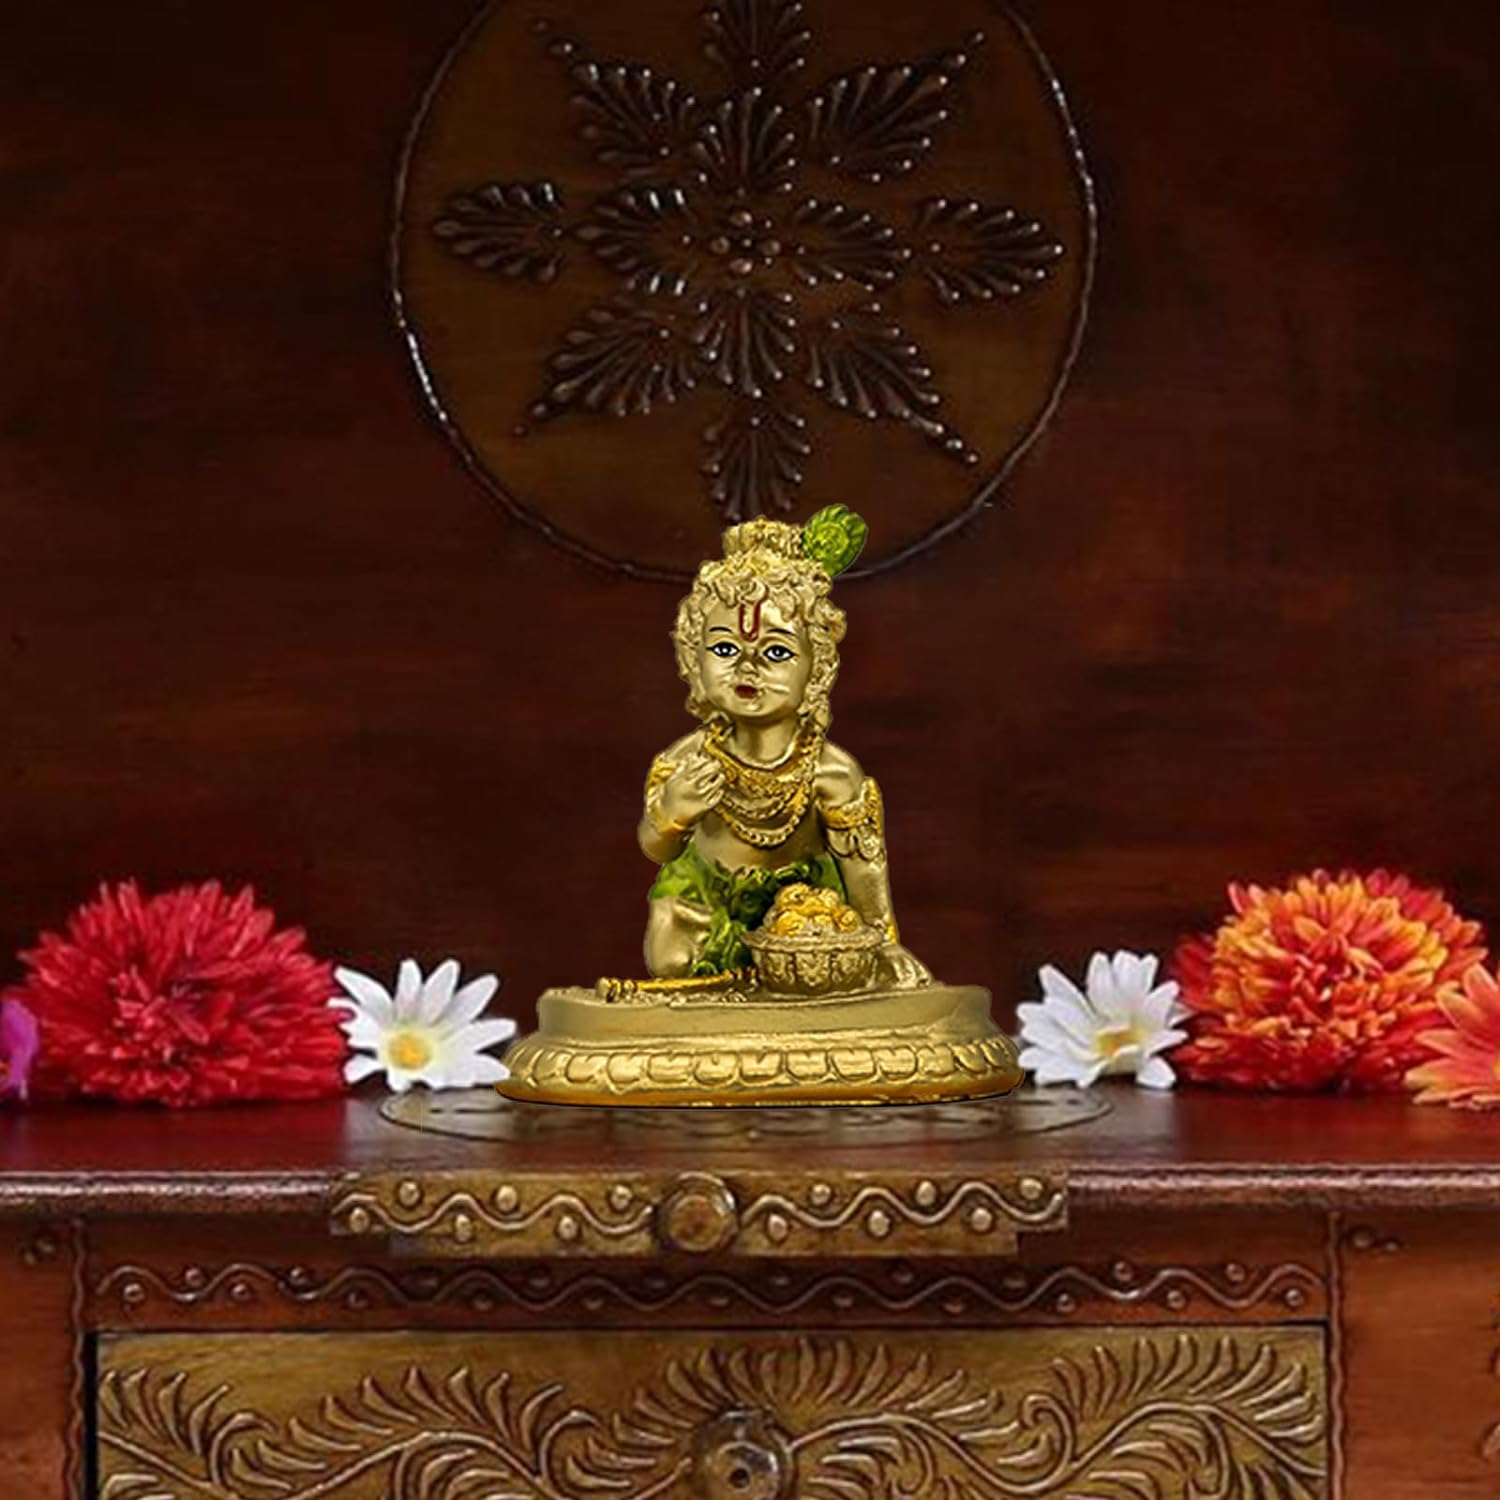 Hindu God Krishna Statue - 3.7 H Baby Krishna Idol Figurine Indian Home Office Mandir Temple Pooja Item Diwali Gifts for Friends Puja Gifts for Man Woman